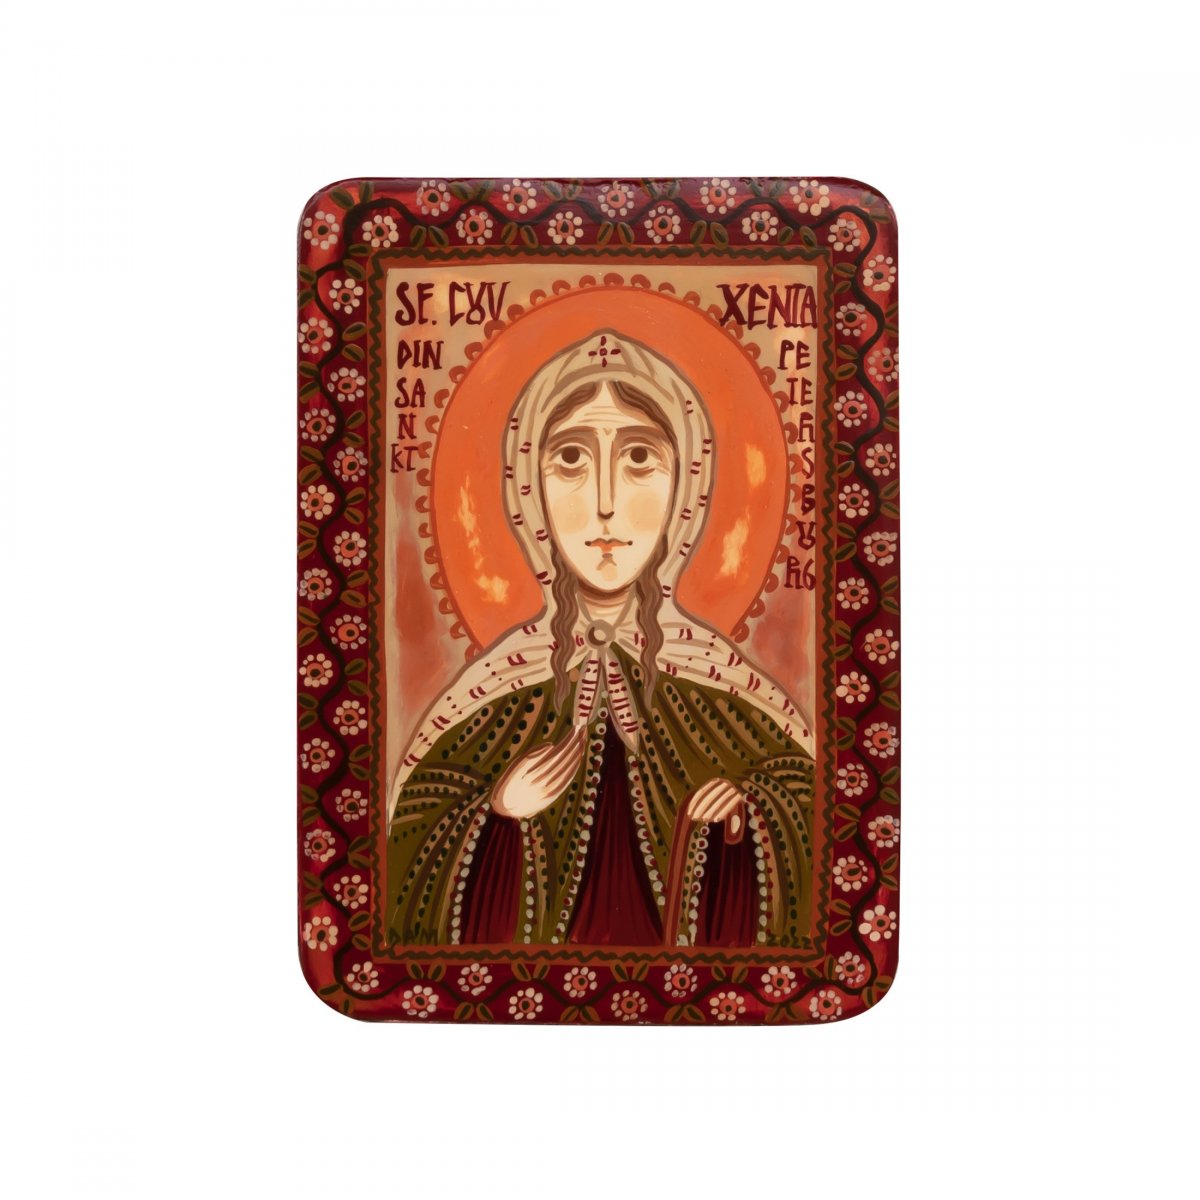 Wood icon, "Saint Xenia of St. Petersburg", miniature, 7x10cm